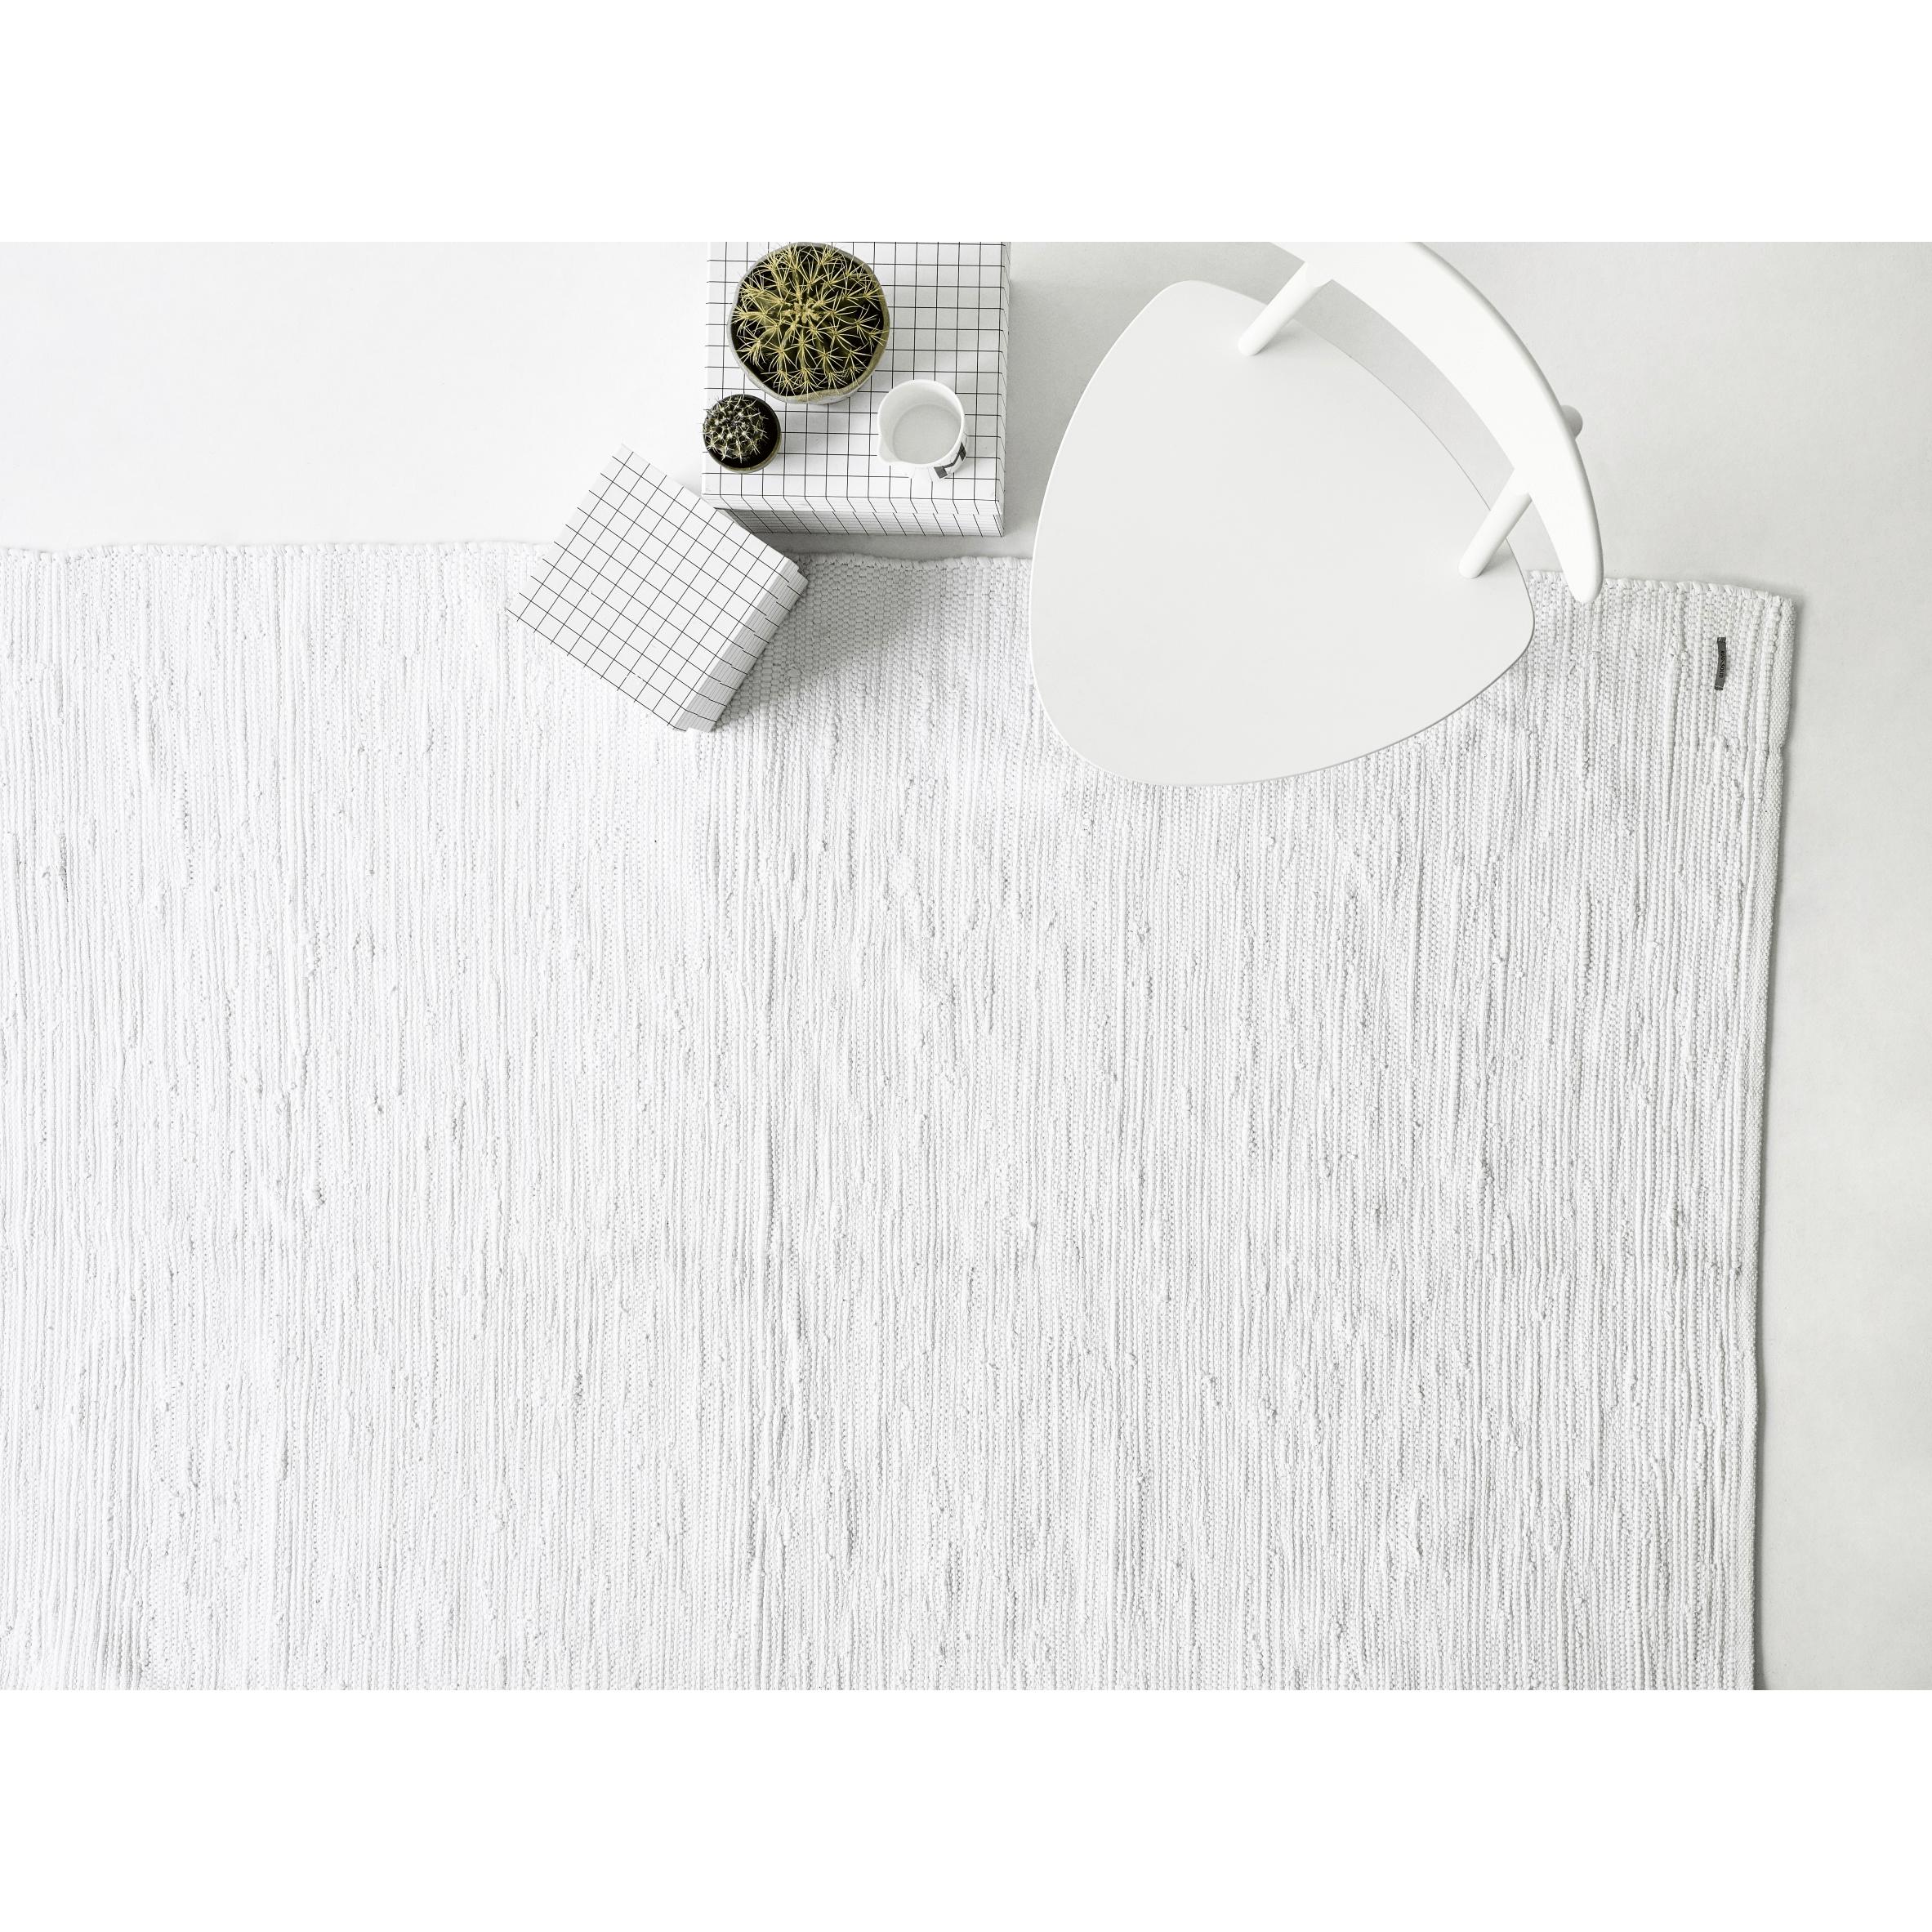 Rug Solid Tapon de coton blanc, 170 x 240 cm